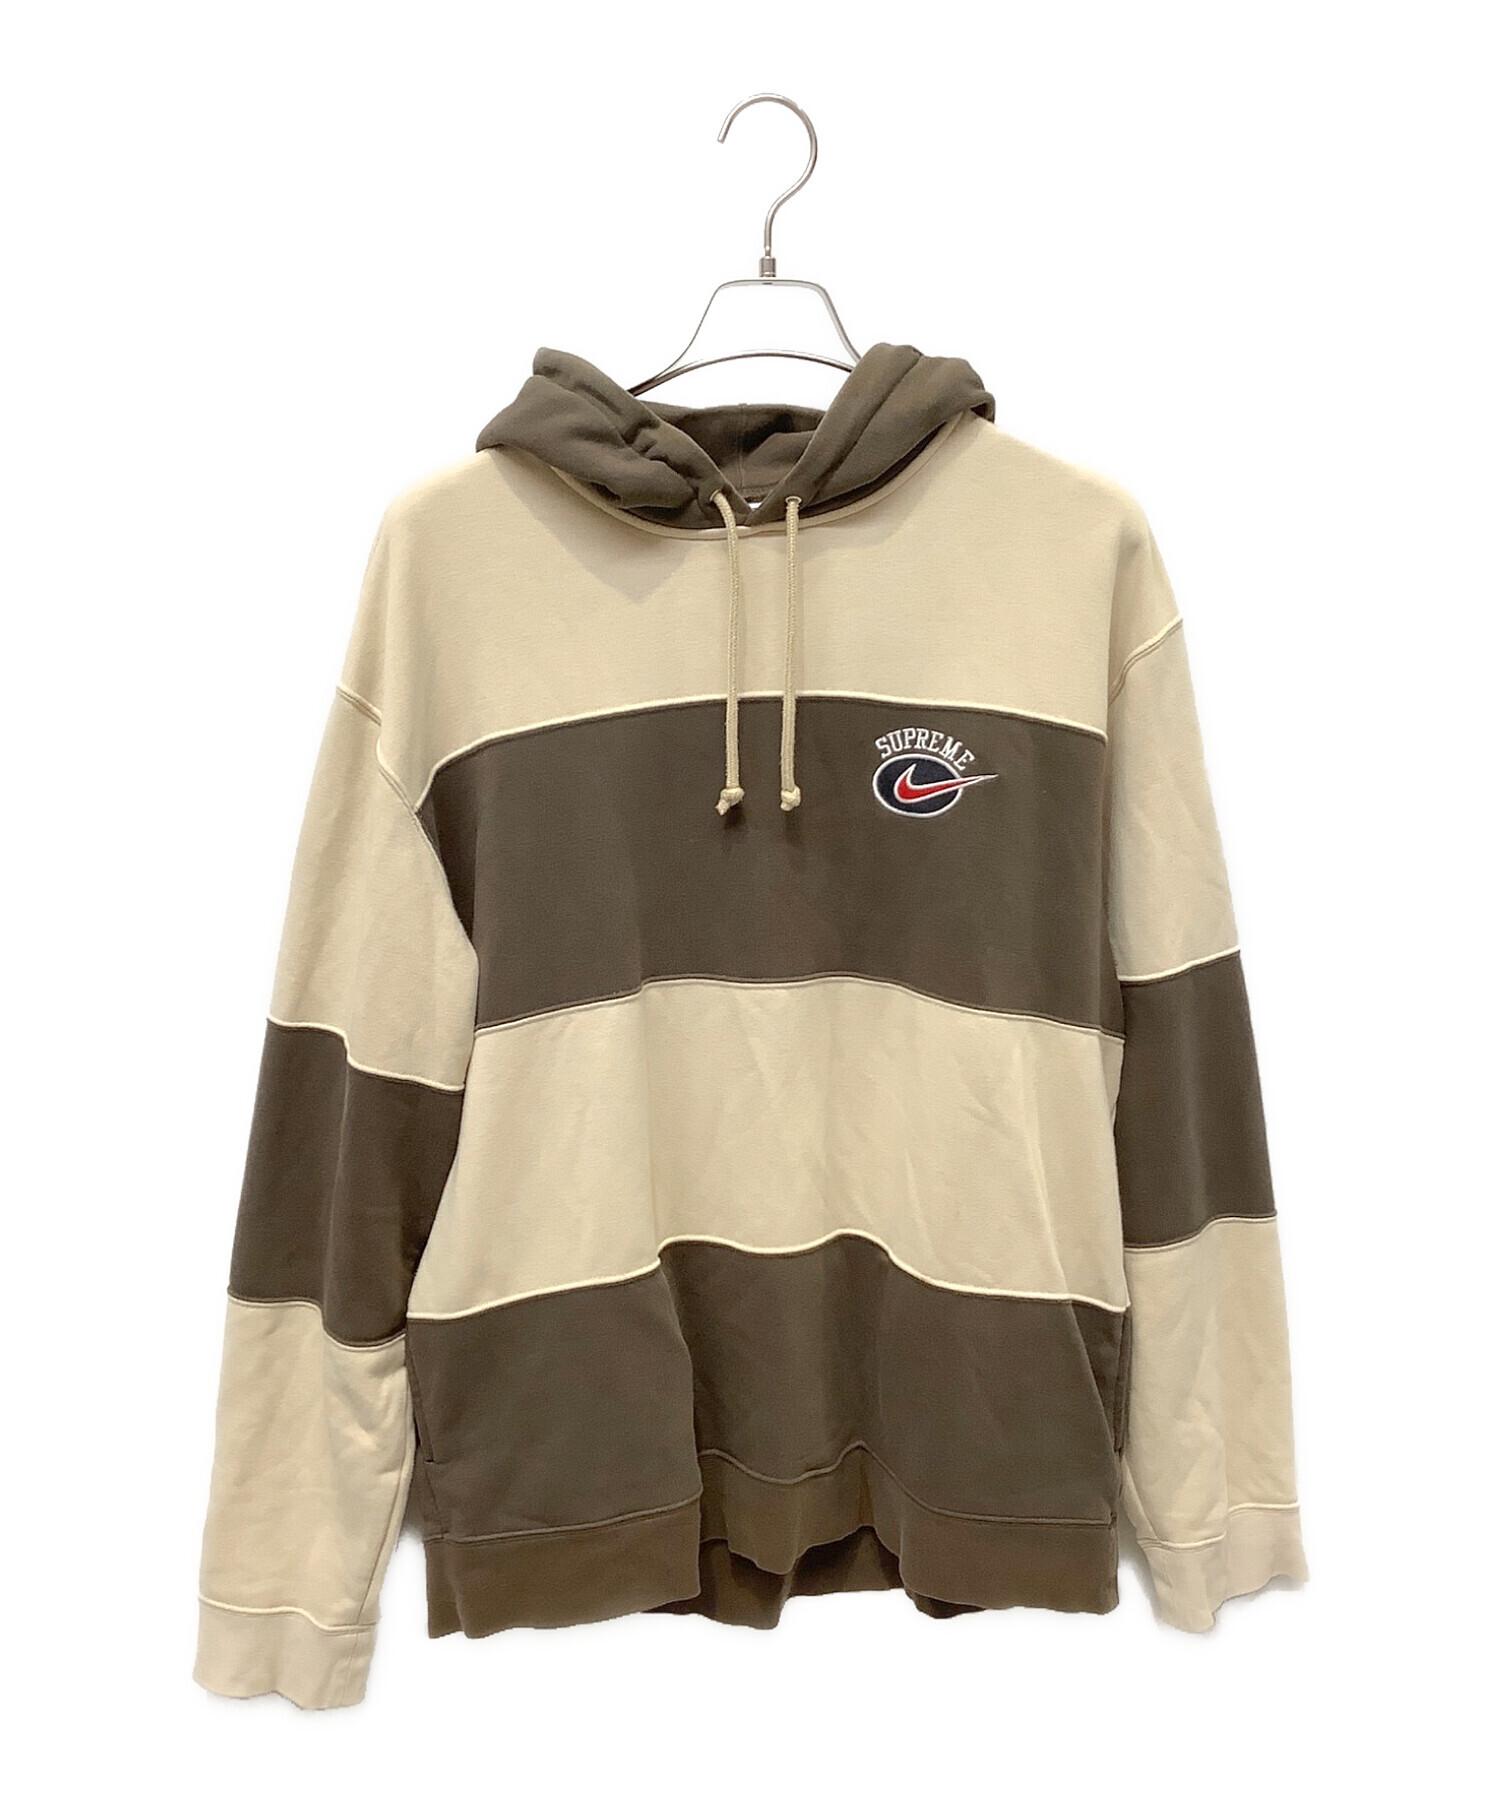 NIKE (ナイキ) SUPREME (シュプリーム) Stripe Hooded Sweatshirt ブラウン×アイボリー サイズ:L